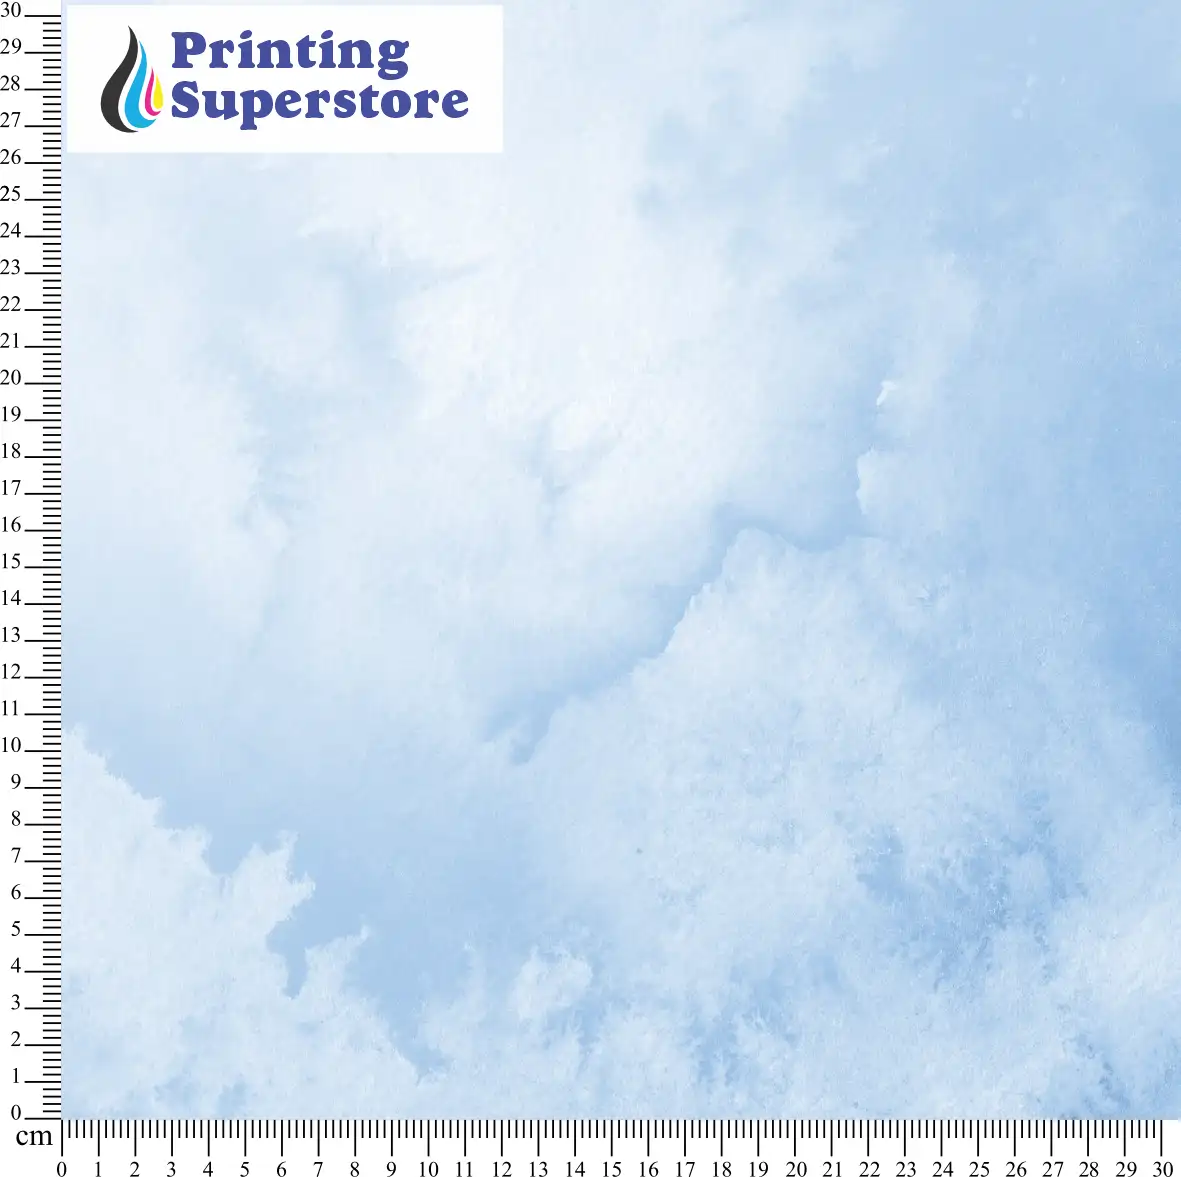 Blue Watercolour theme pattern printed on Self Adhesive Vinyl (SAV), Heat Transfer Vinyl (HTV) and Cardstock.